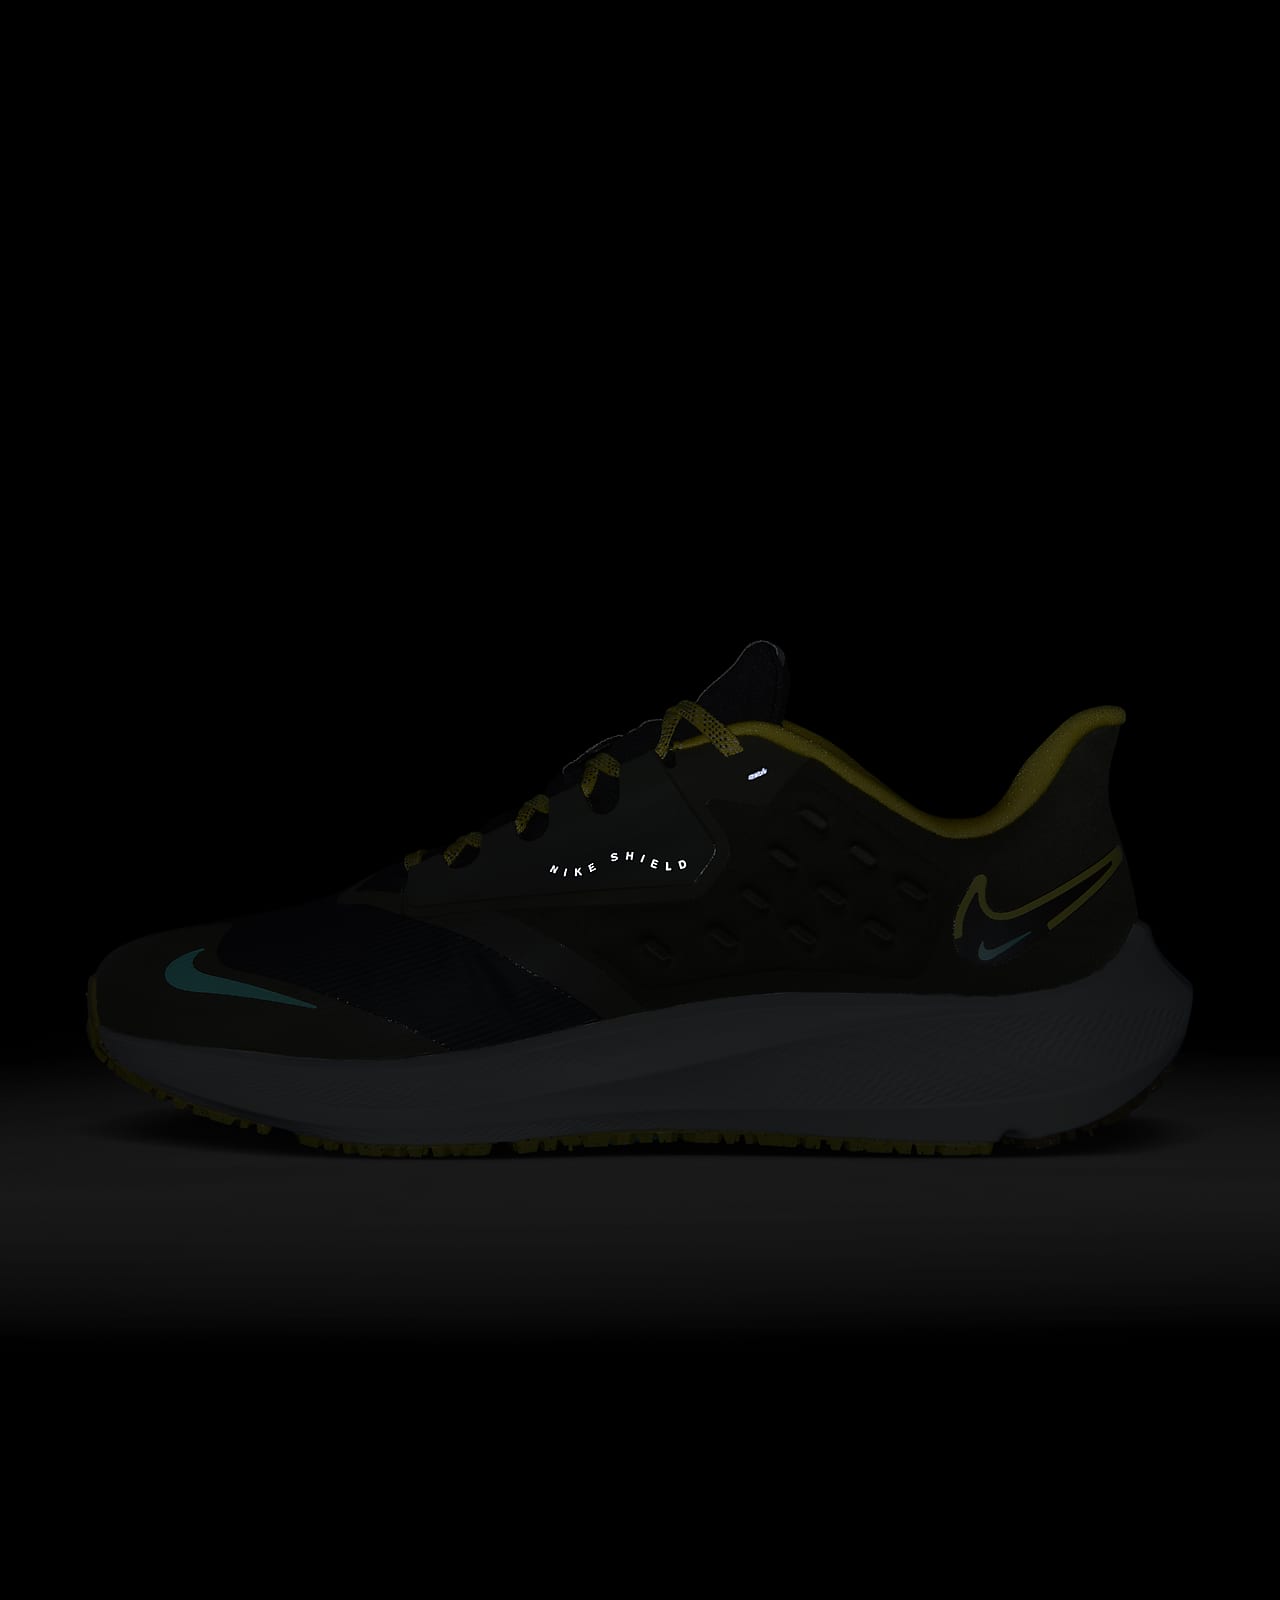 Nike Pegasus Shield Men's Weatherized Road Running Shoes.